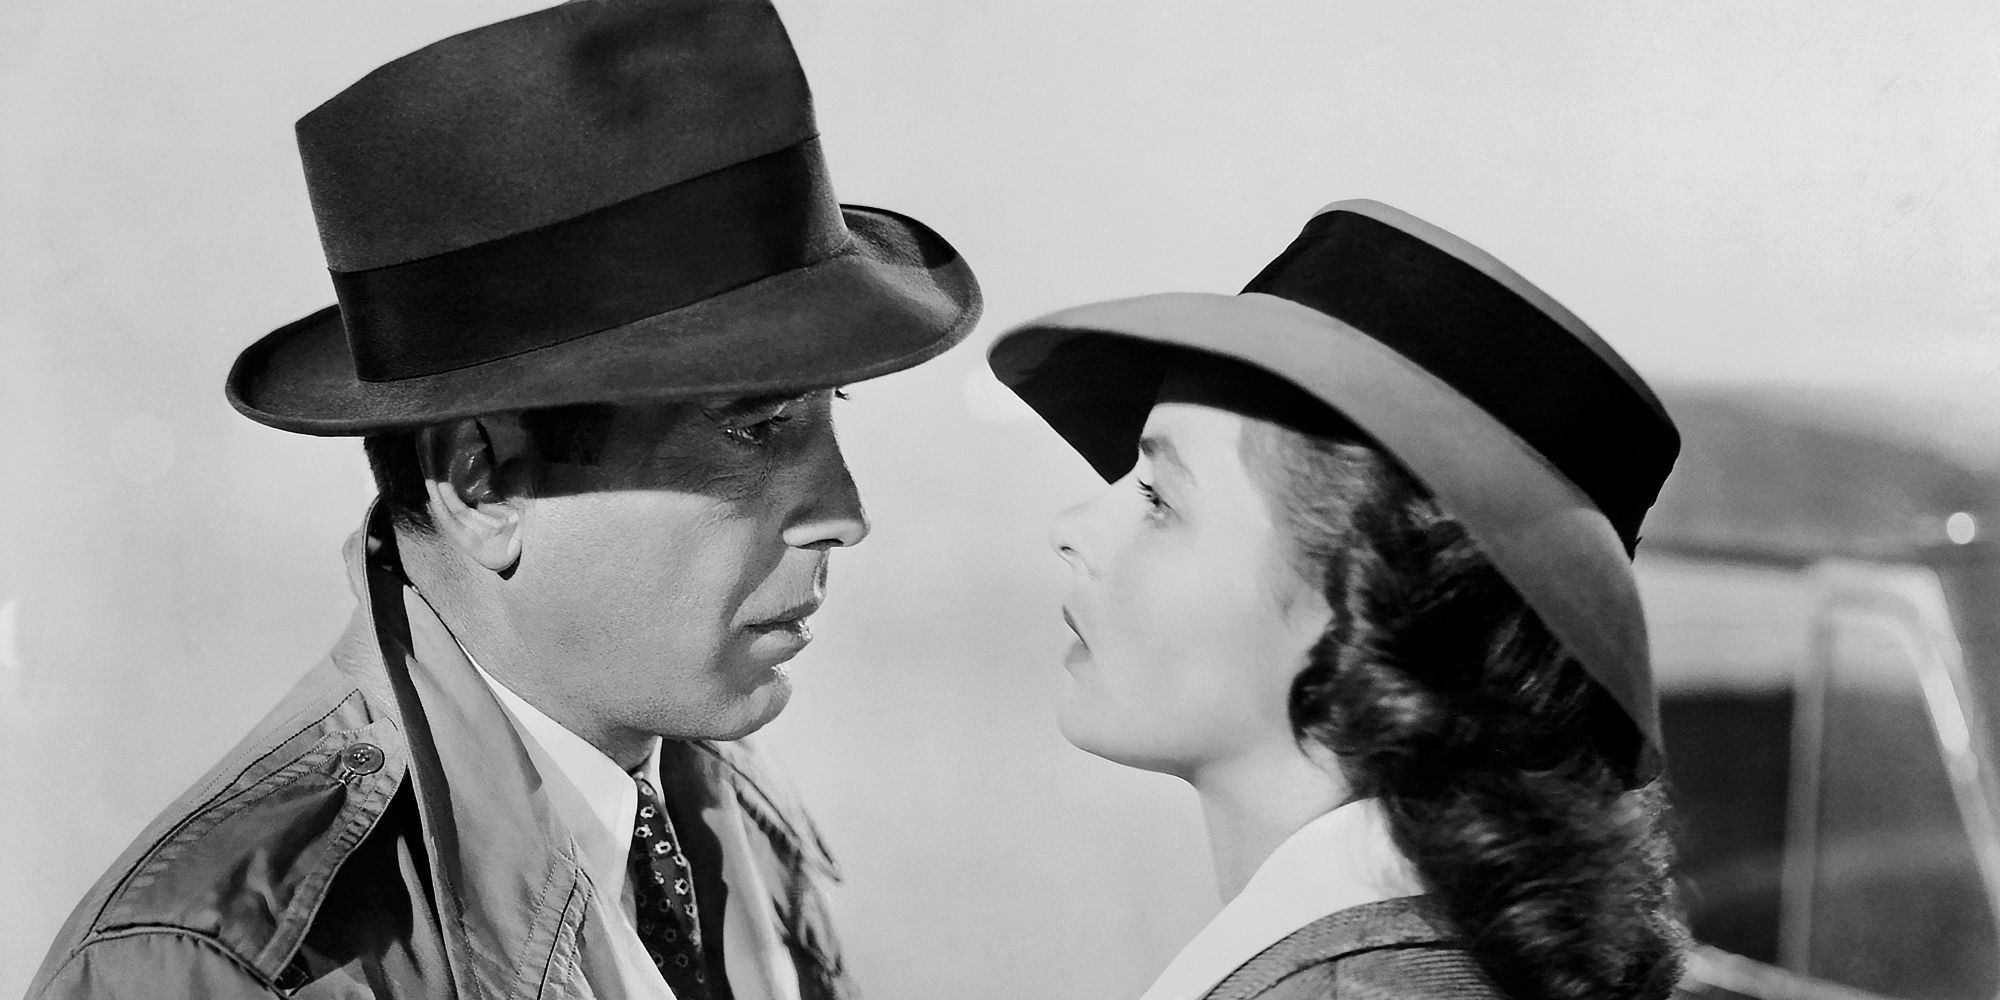 Humphrey Bogart and Ingrid Bergman in 'Casablanca'